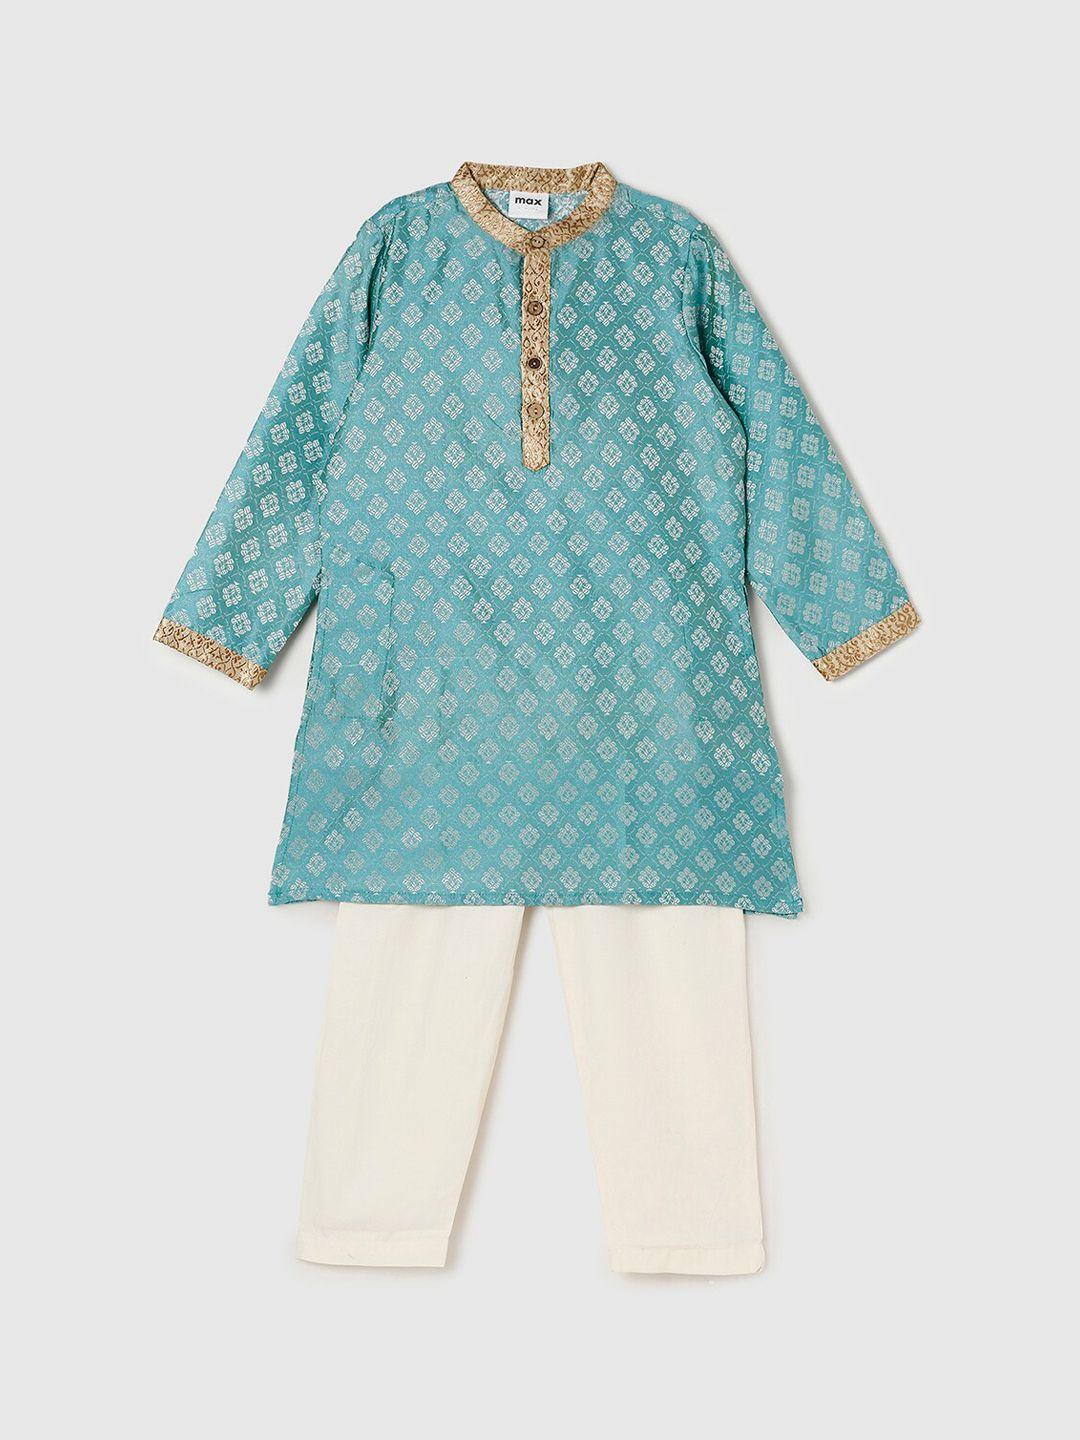 max mandarin collar kurta with trousers